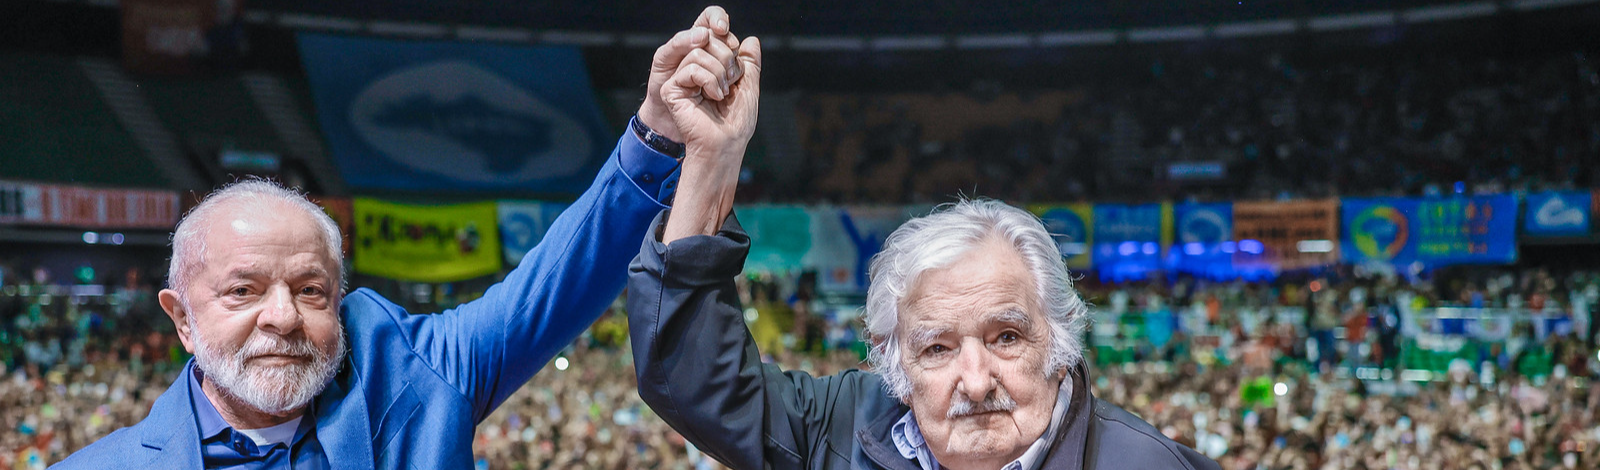 No congresso da UNE, Lula e Mujica convocam juventude a persistir na luta por democracia